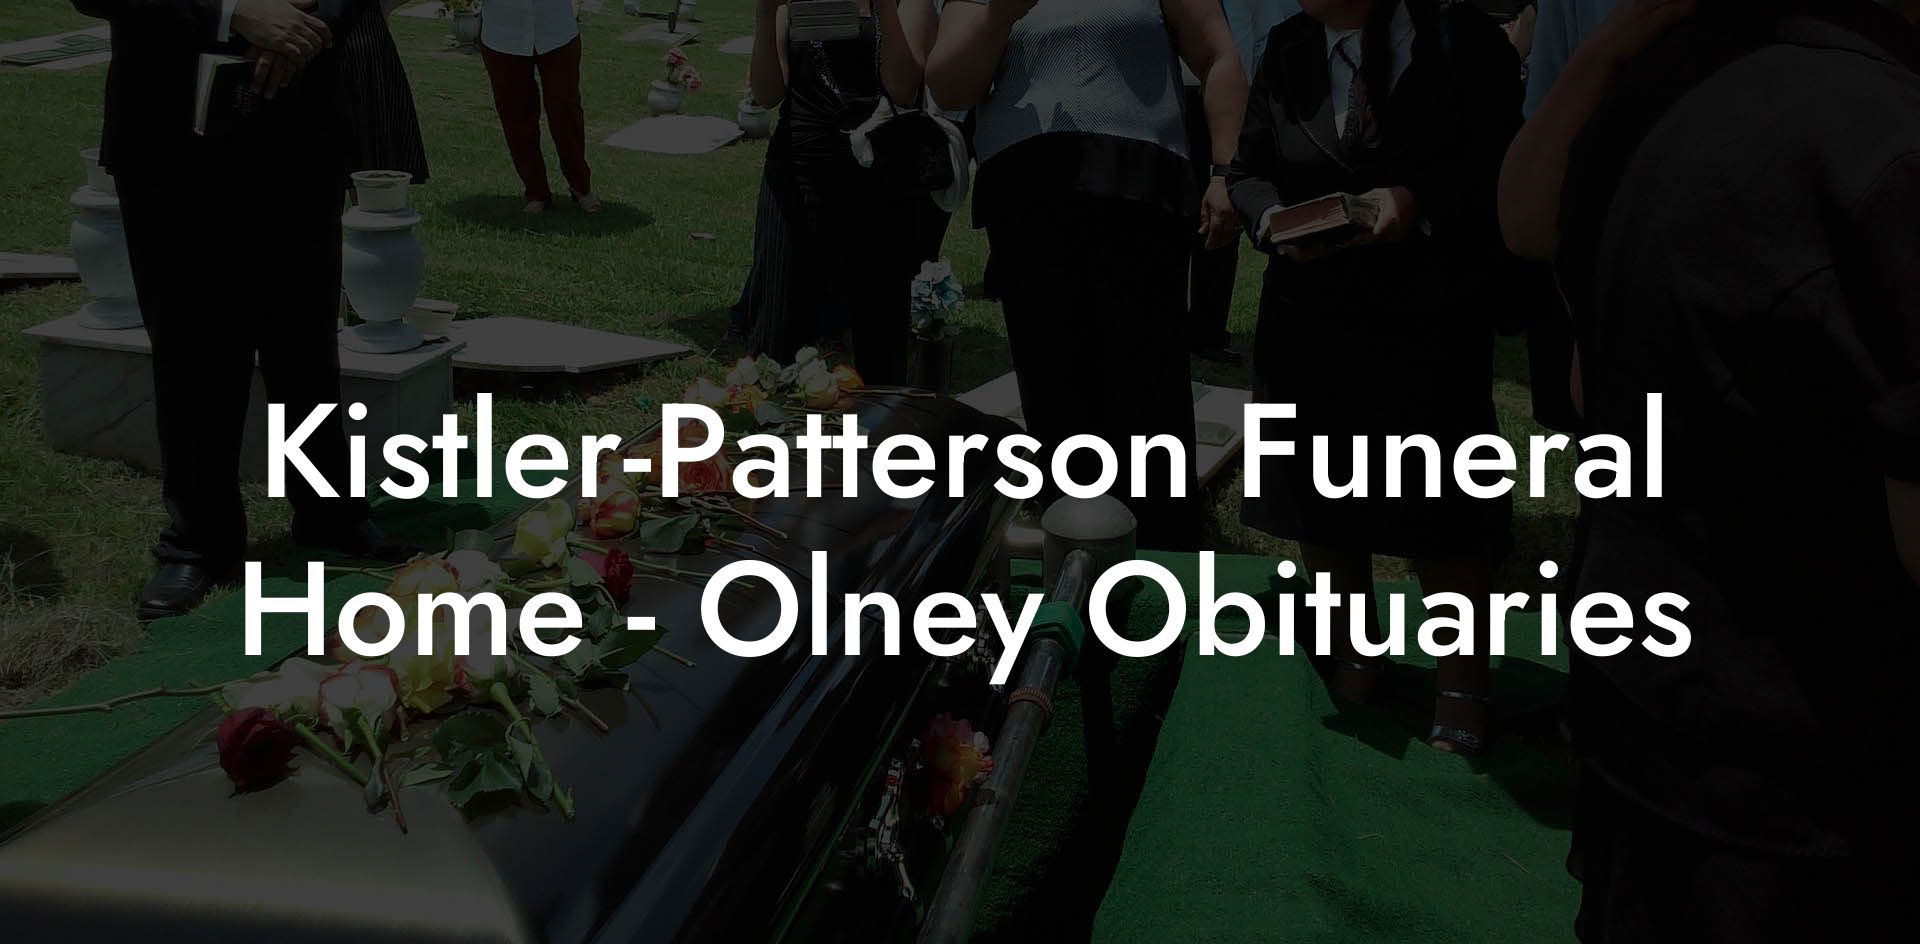 Kistler-Patterson Funeral Home - Olney Obituaries